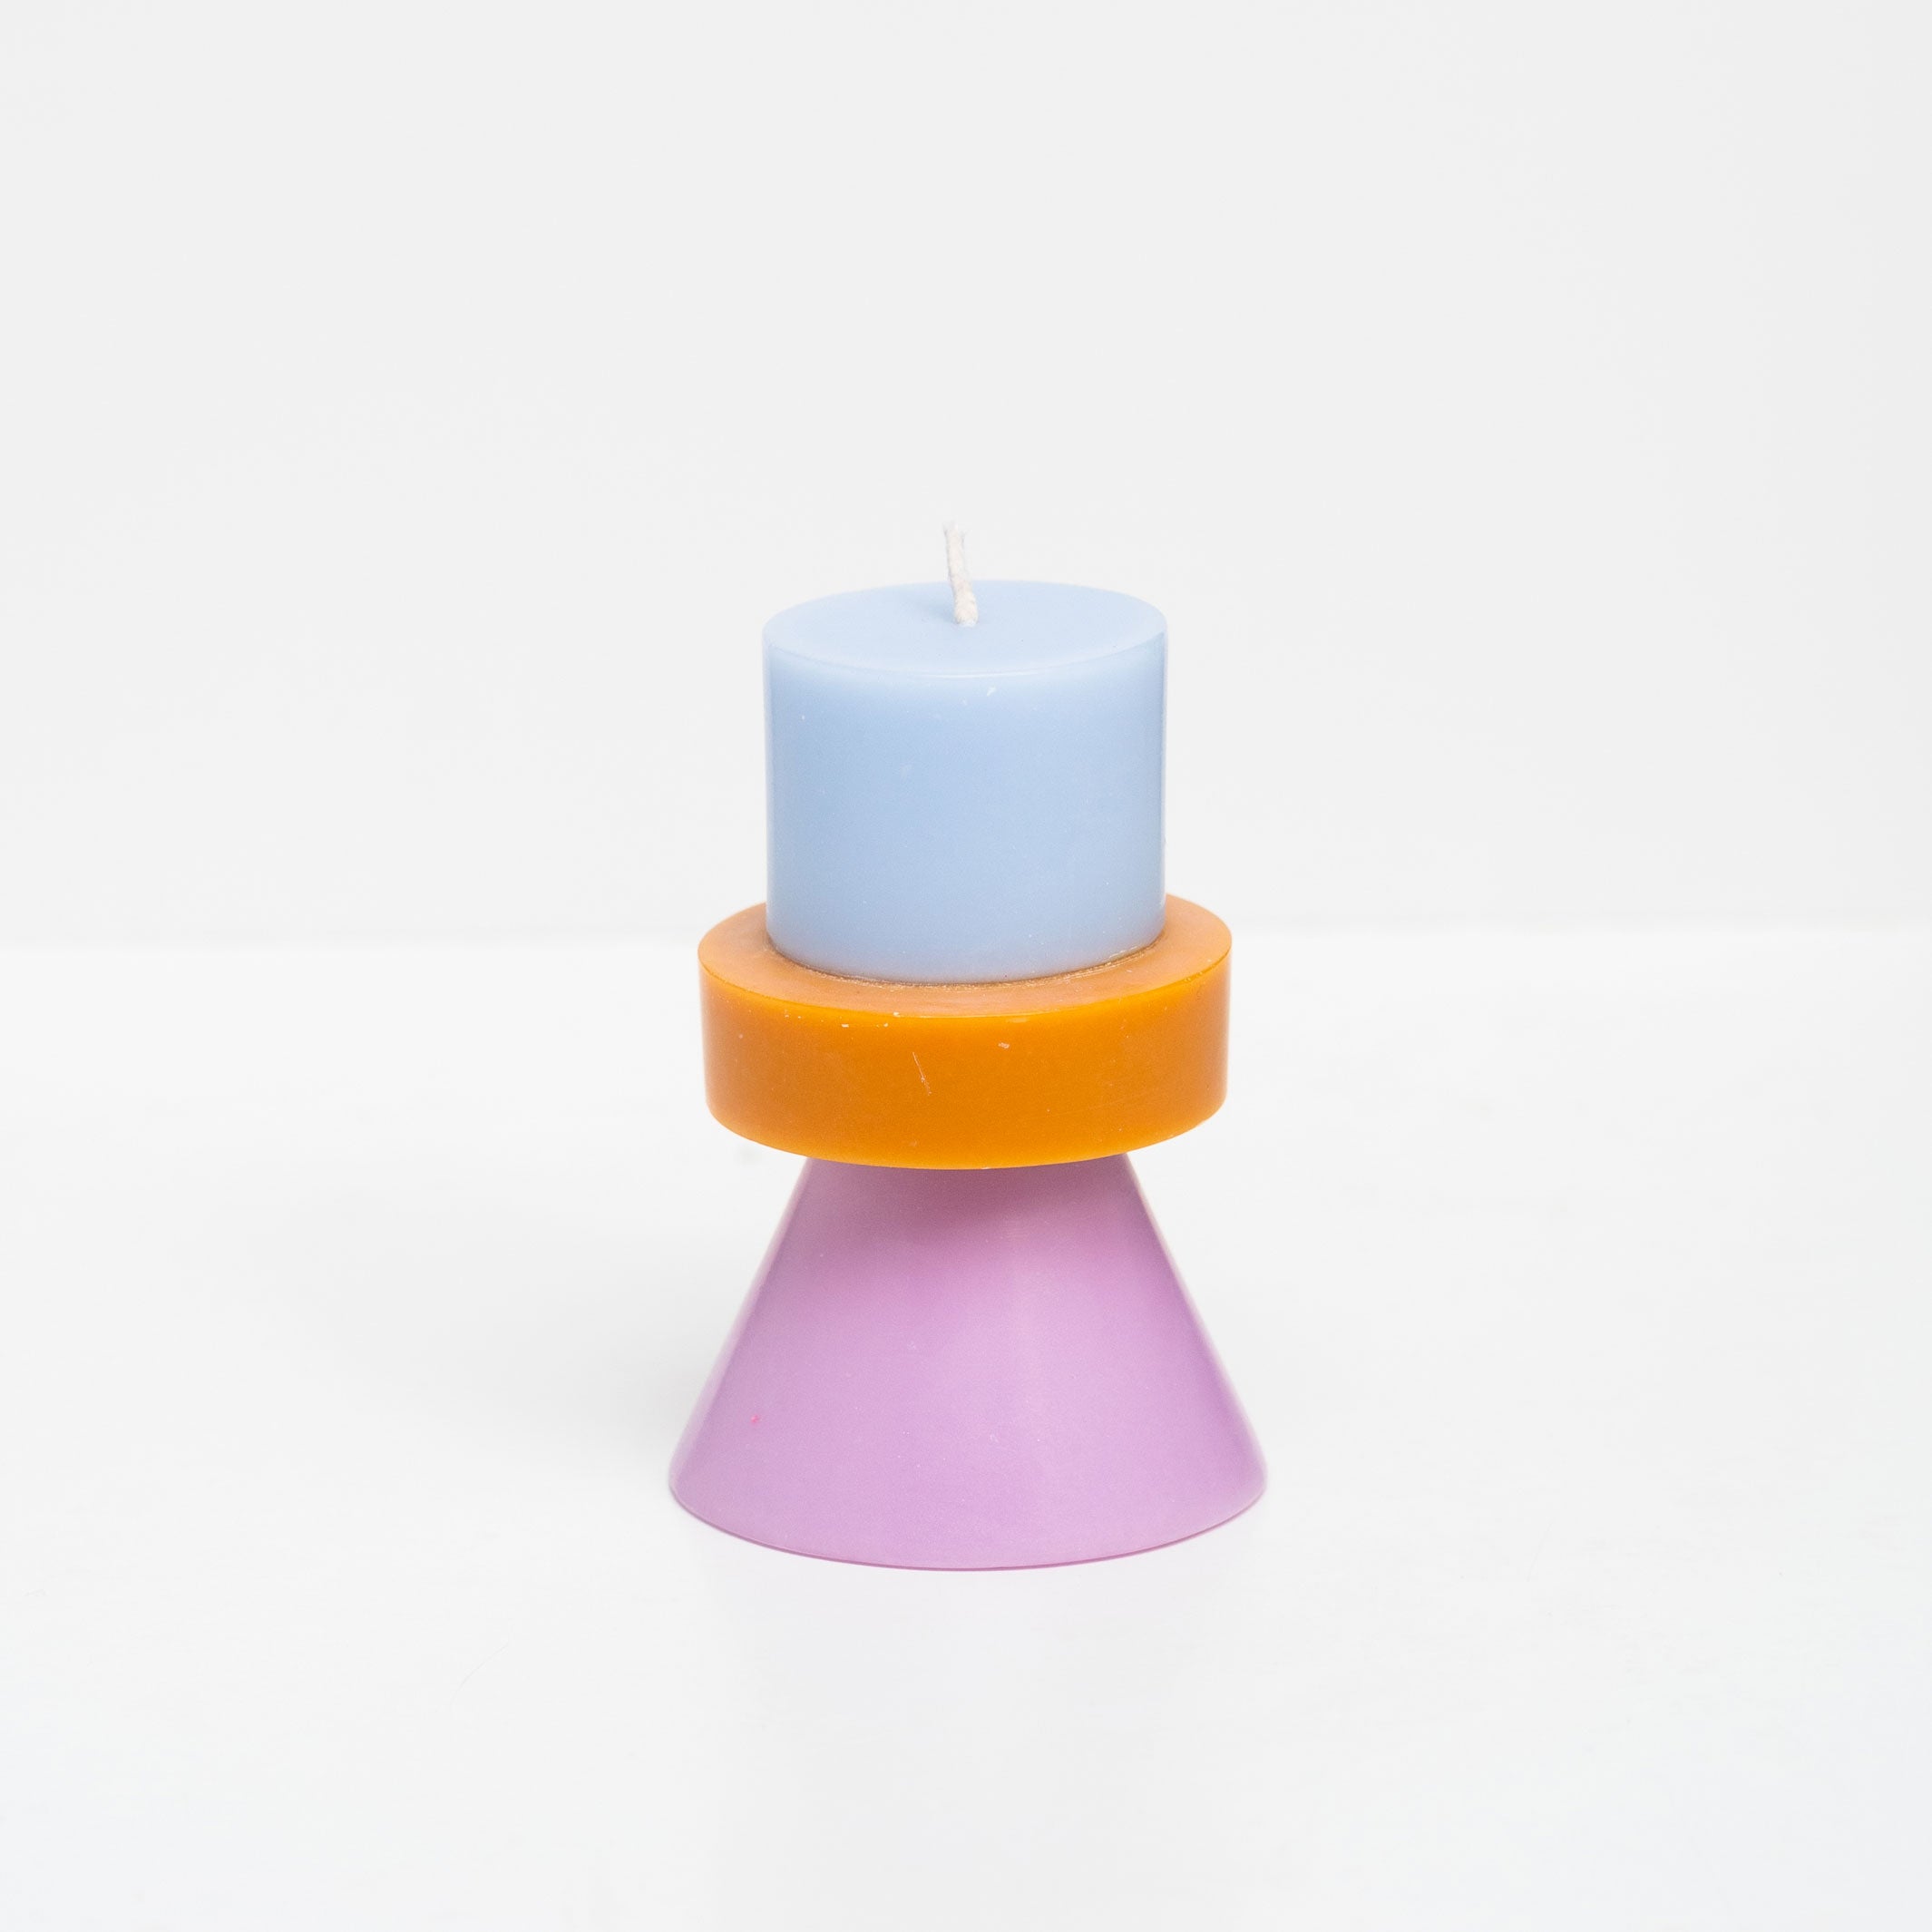 STACK CANDLE MINI | KERZE in Farben sky-caramel-violet | 20 Std. Brenndauer | YOD AND CO